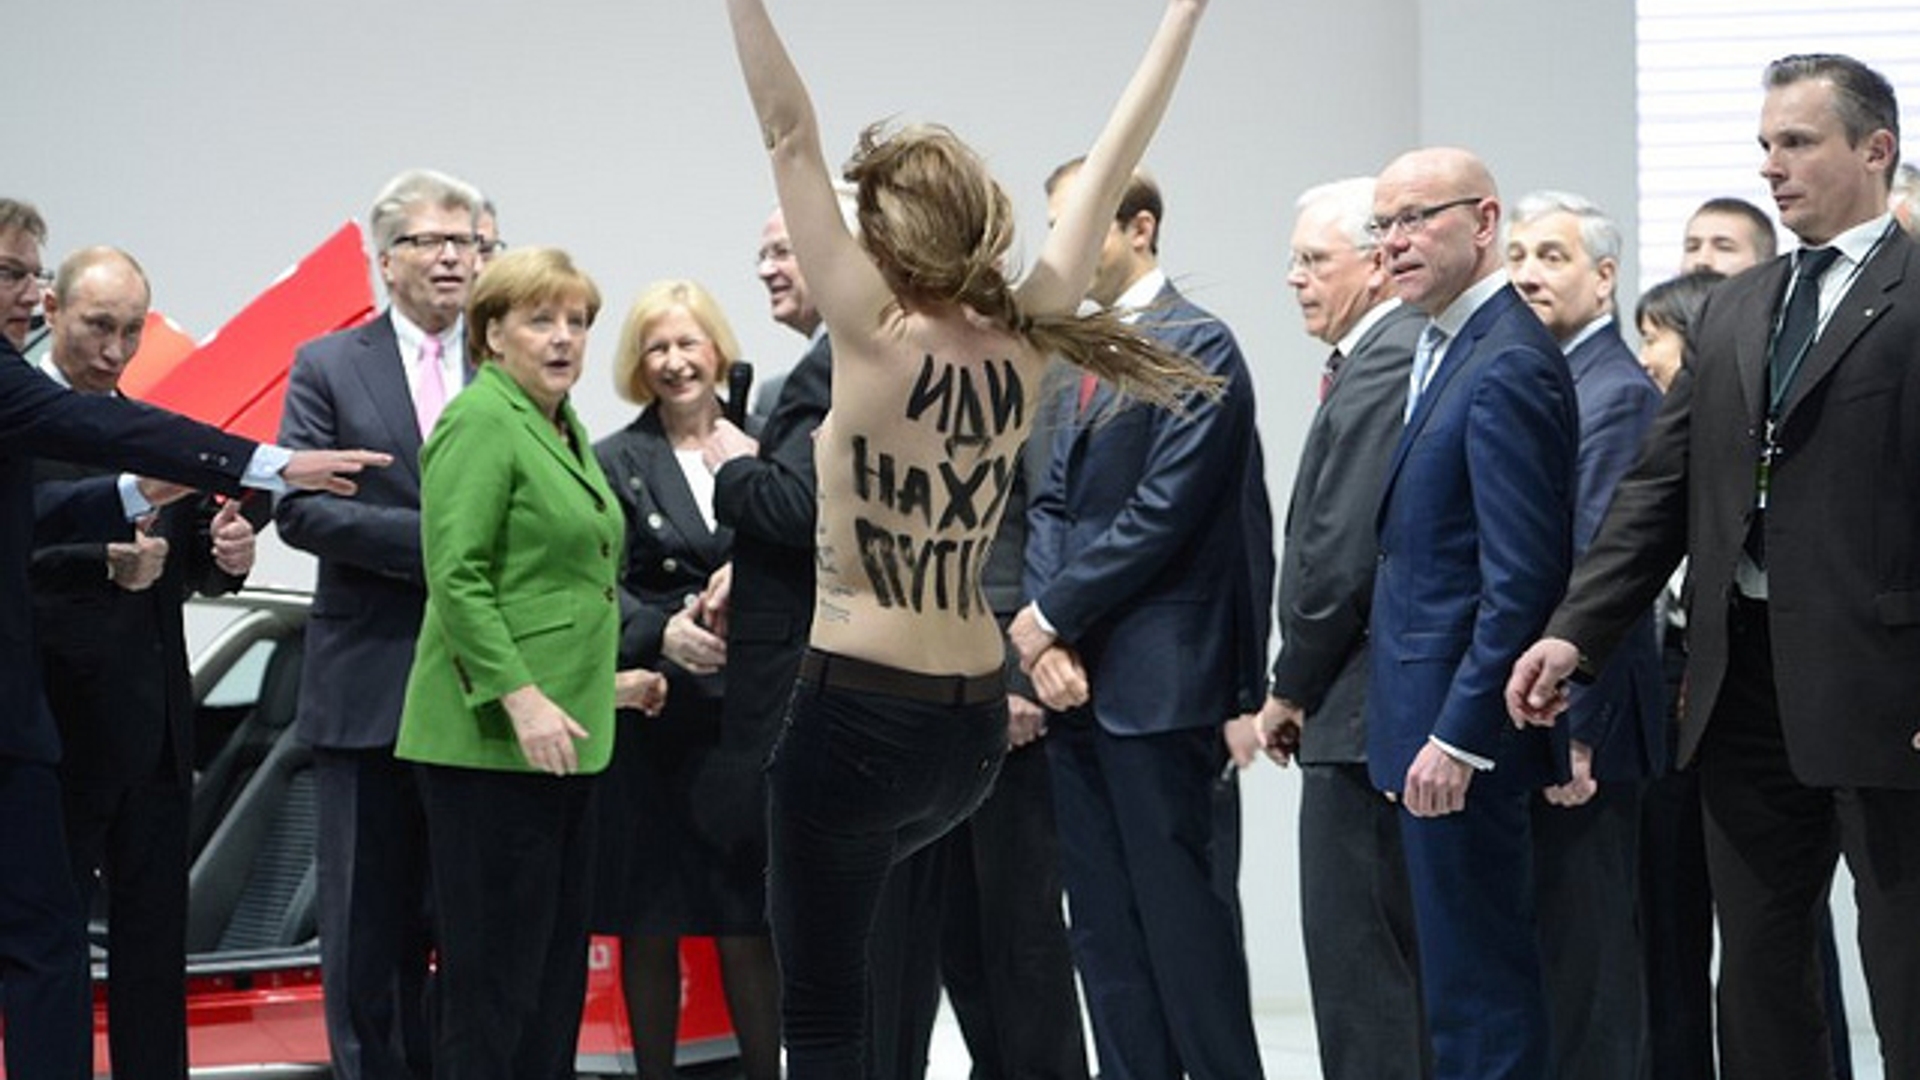 Angela Merkel im grünen Jackett